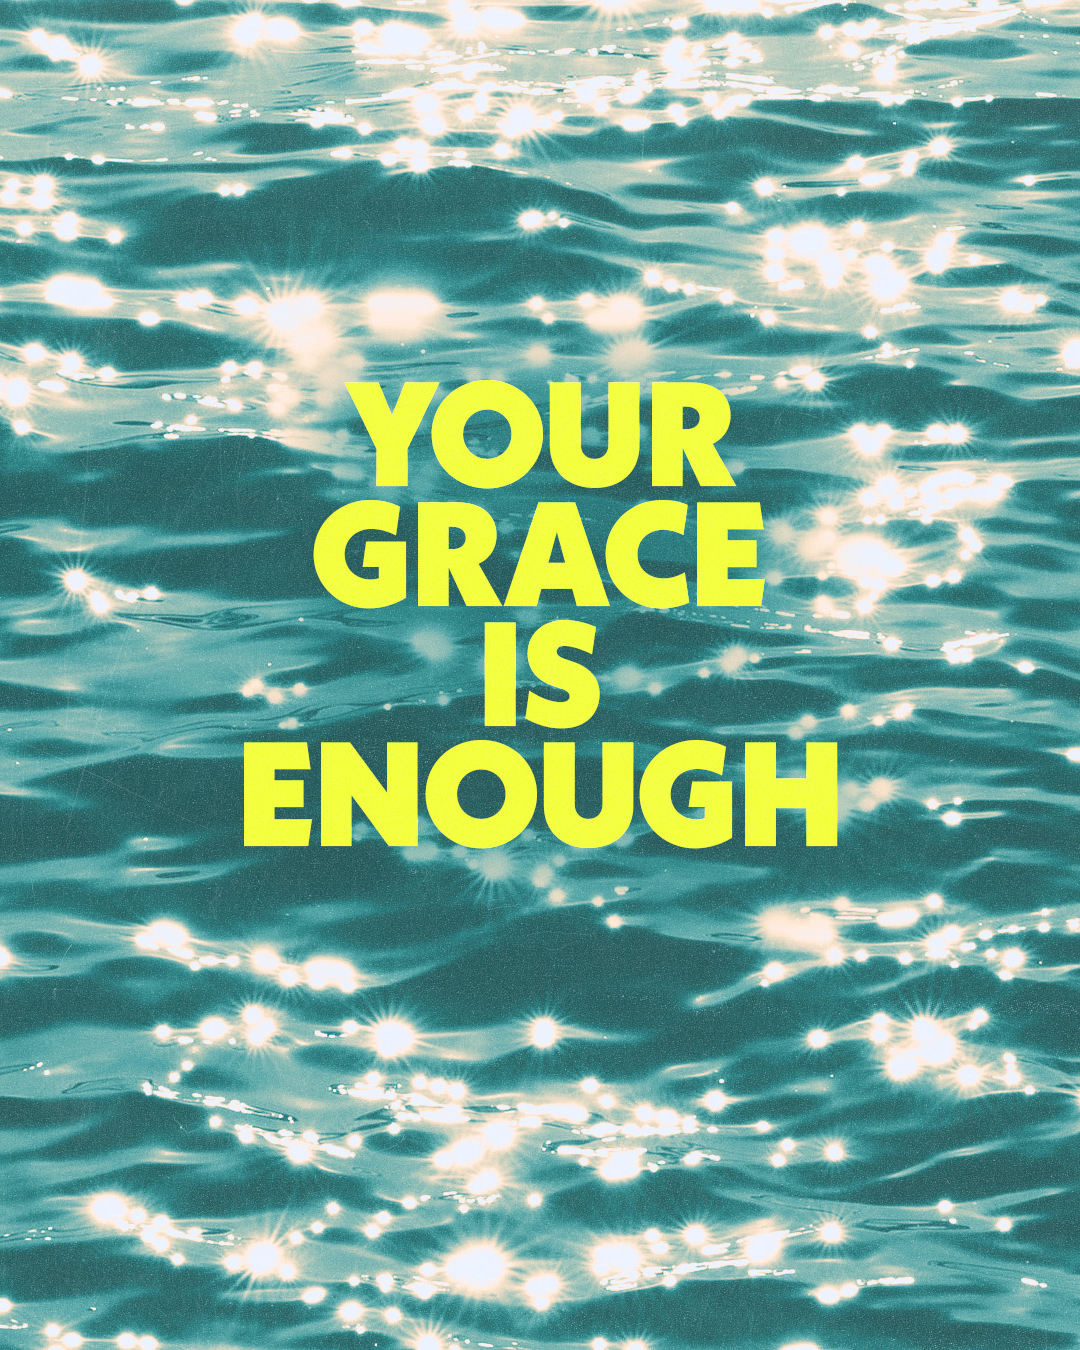 Your grace is enough